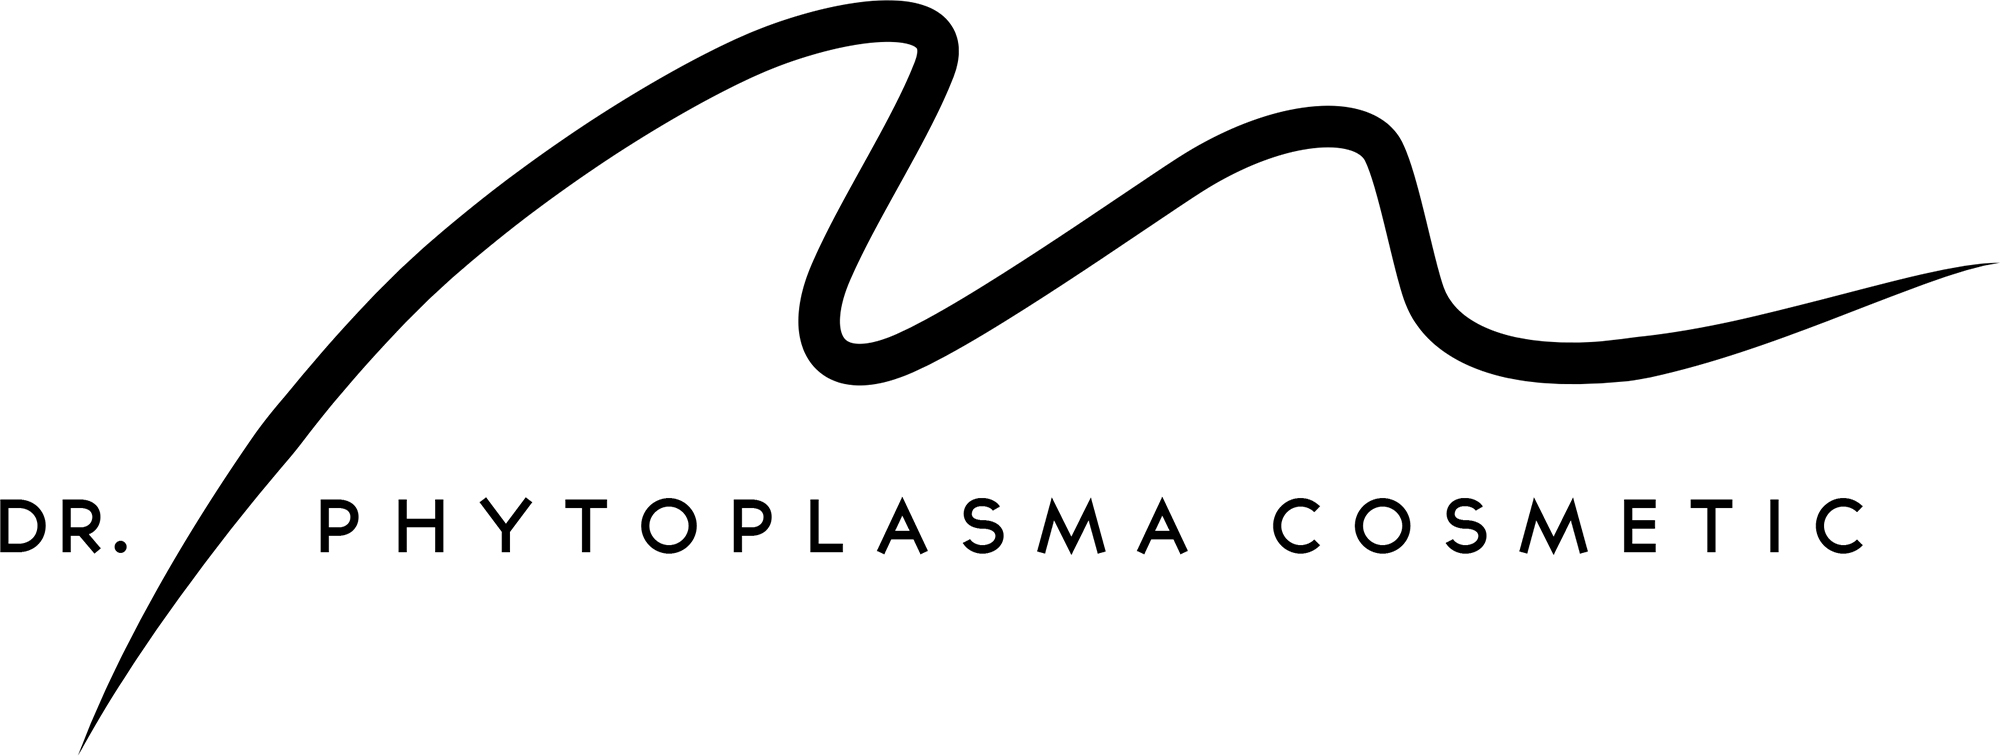 Dr M phytoplasma Logo 01